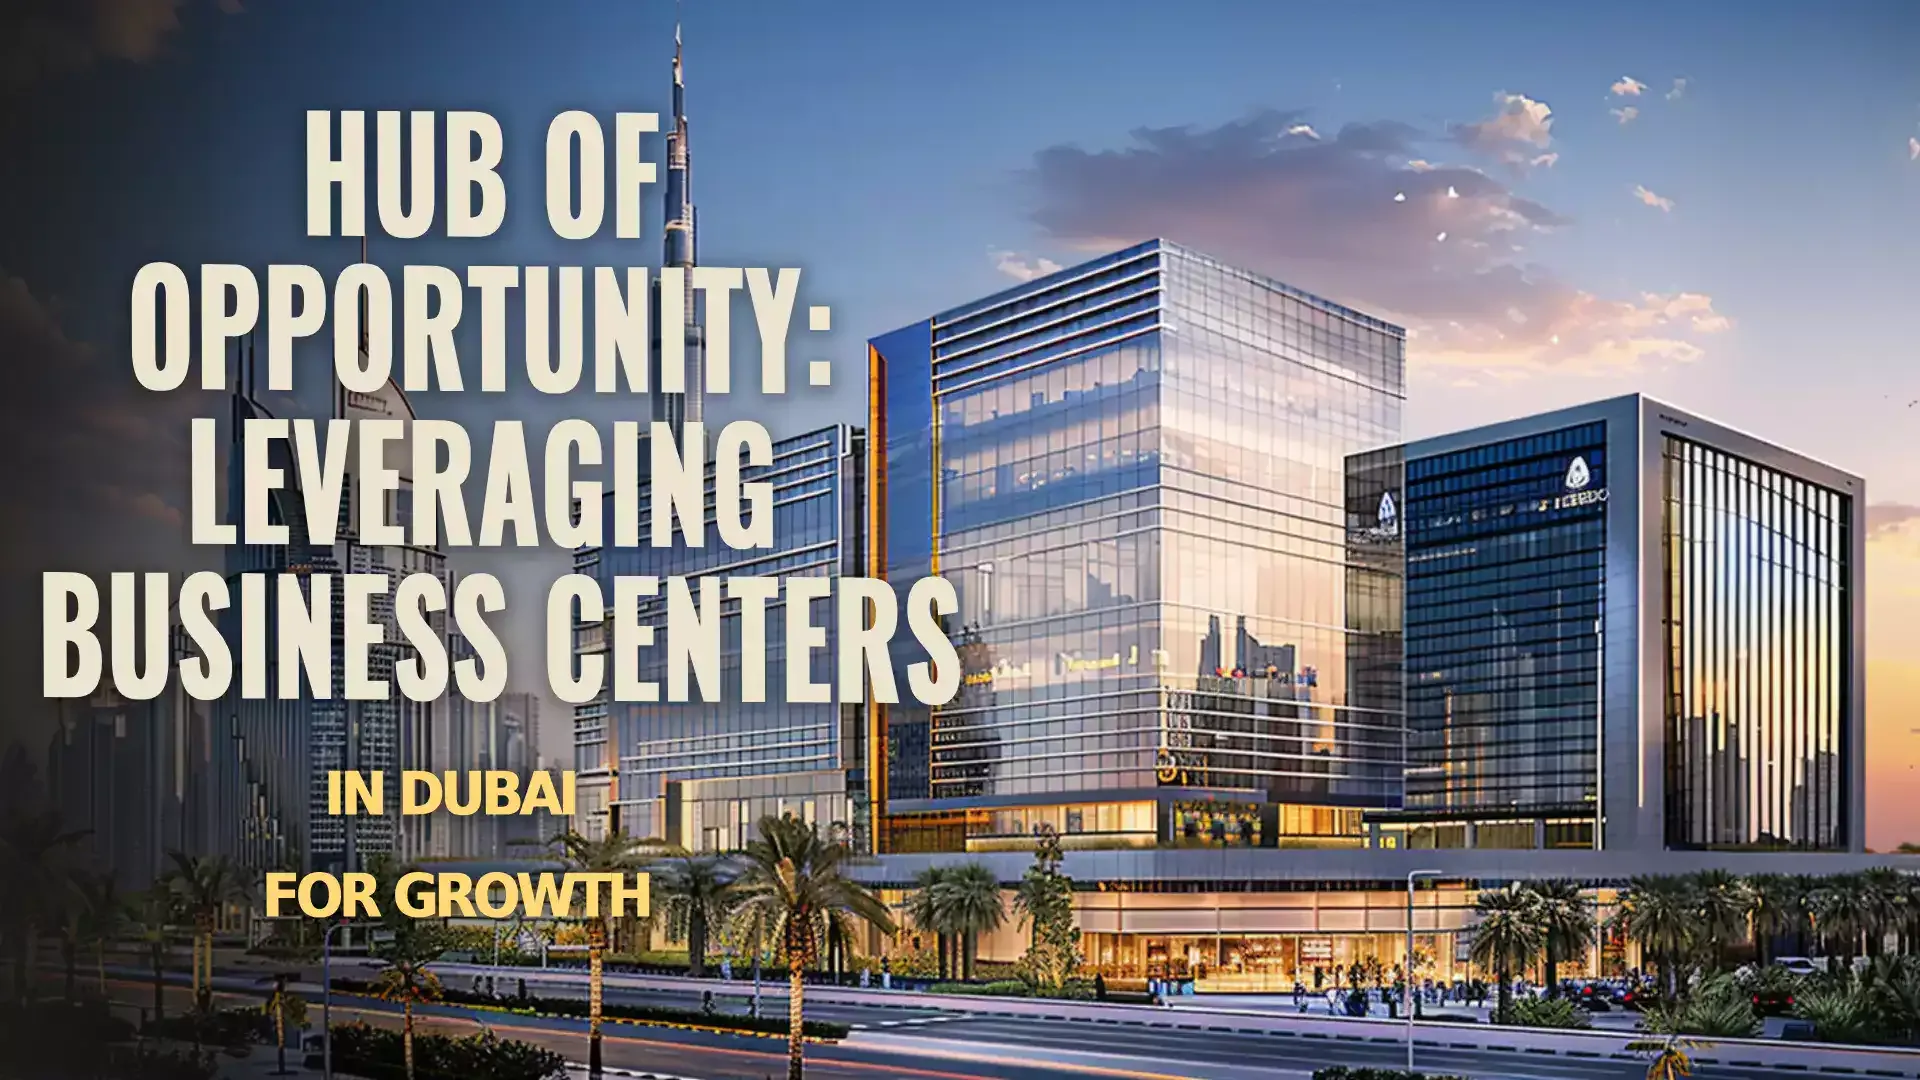 Dubai Business Centers Overview